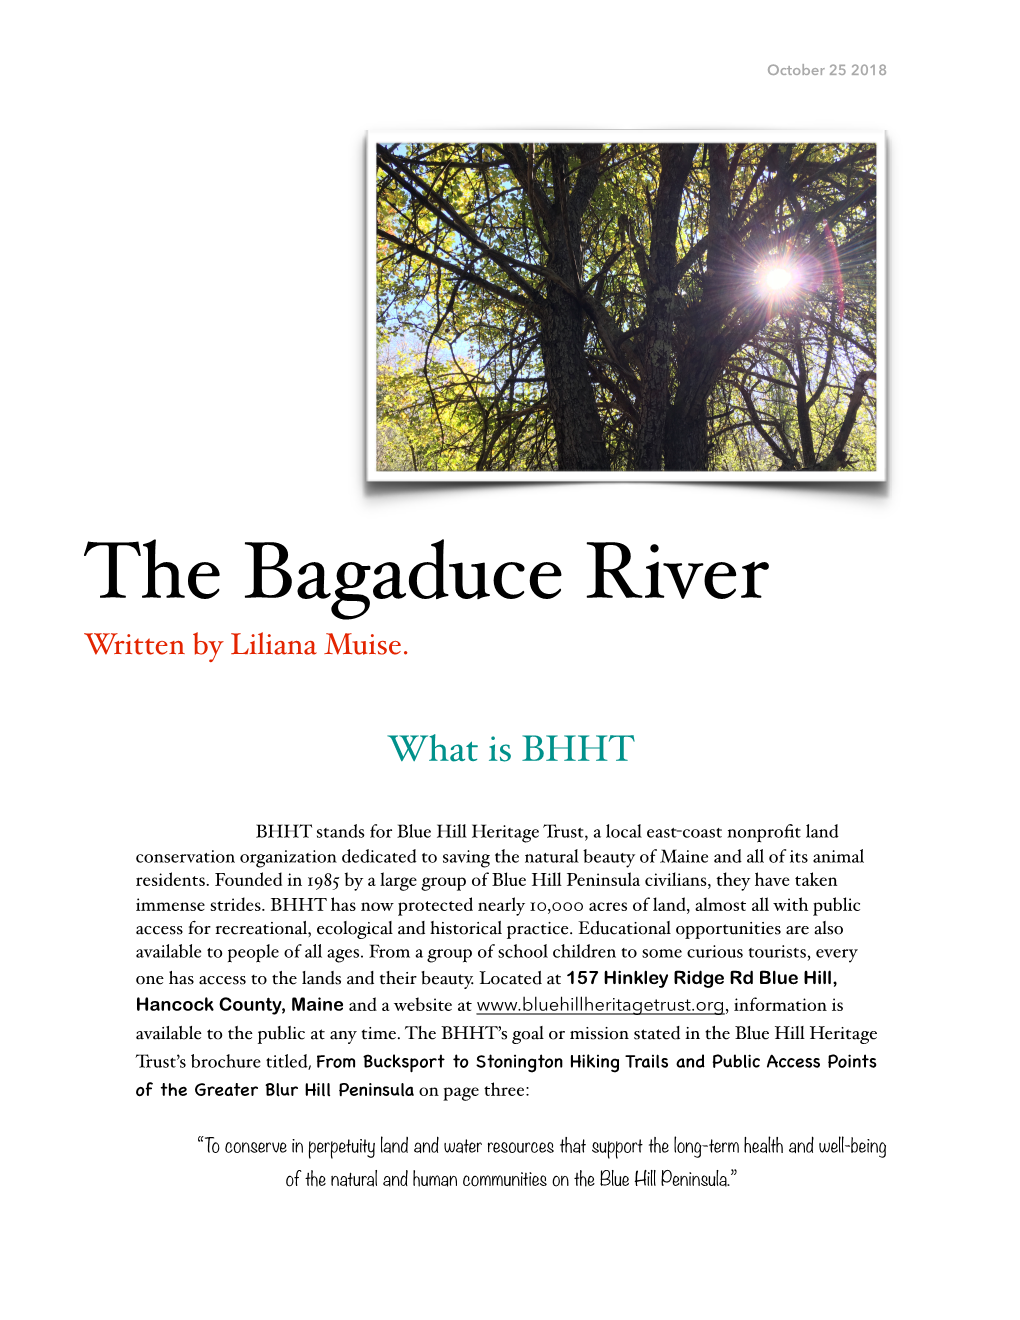 The Bagaduce River Written by Liliana Muise